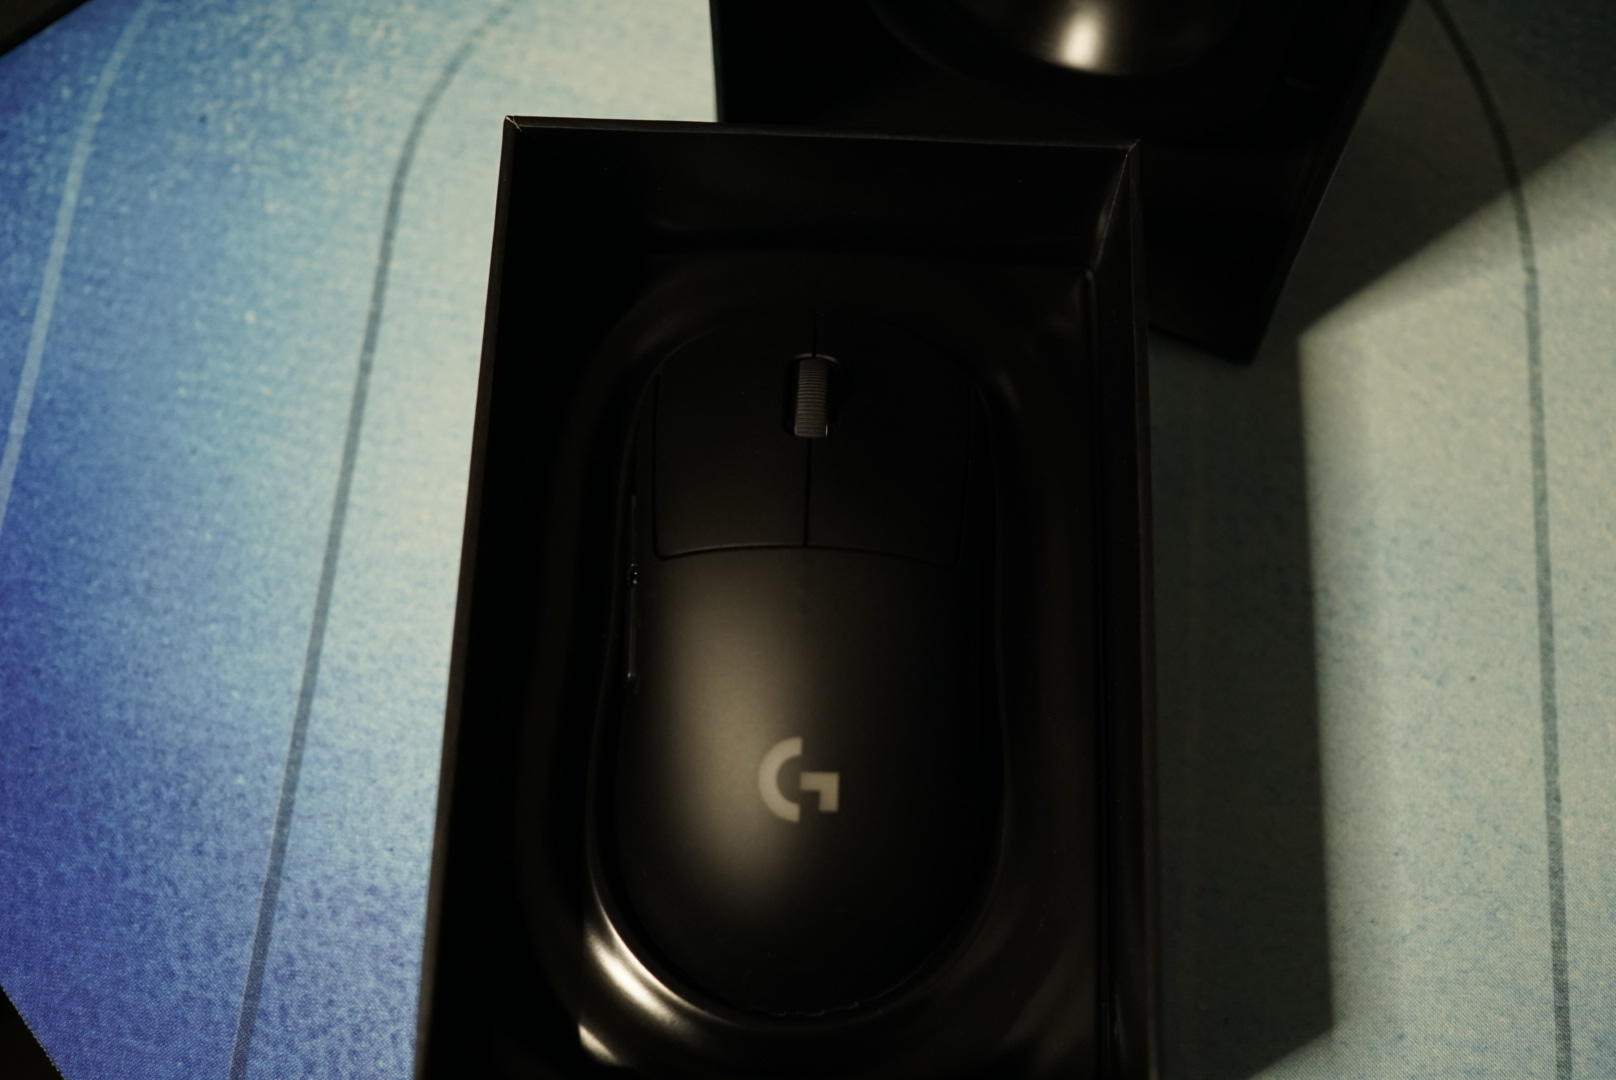 Logicool Pro Lightspeed Wireless Gaming Mouse G Ppd 002wl レビュー ツクモ大阪地区 ツクモなんば店 ツクモ日本橋店 最新情報